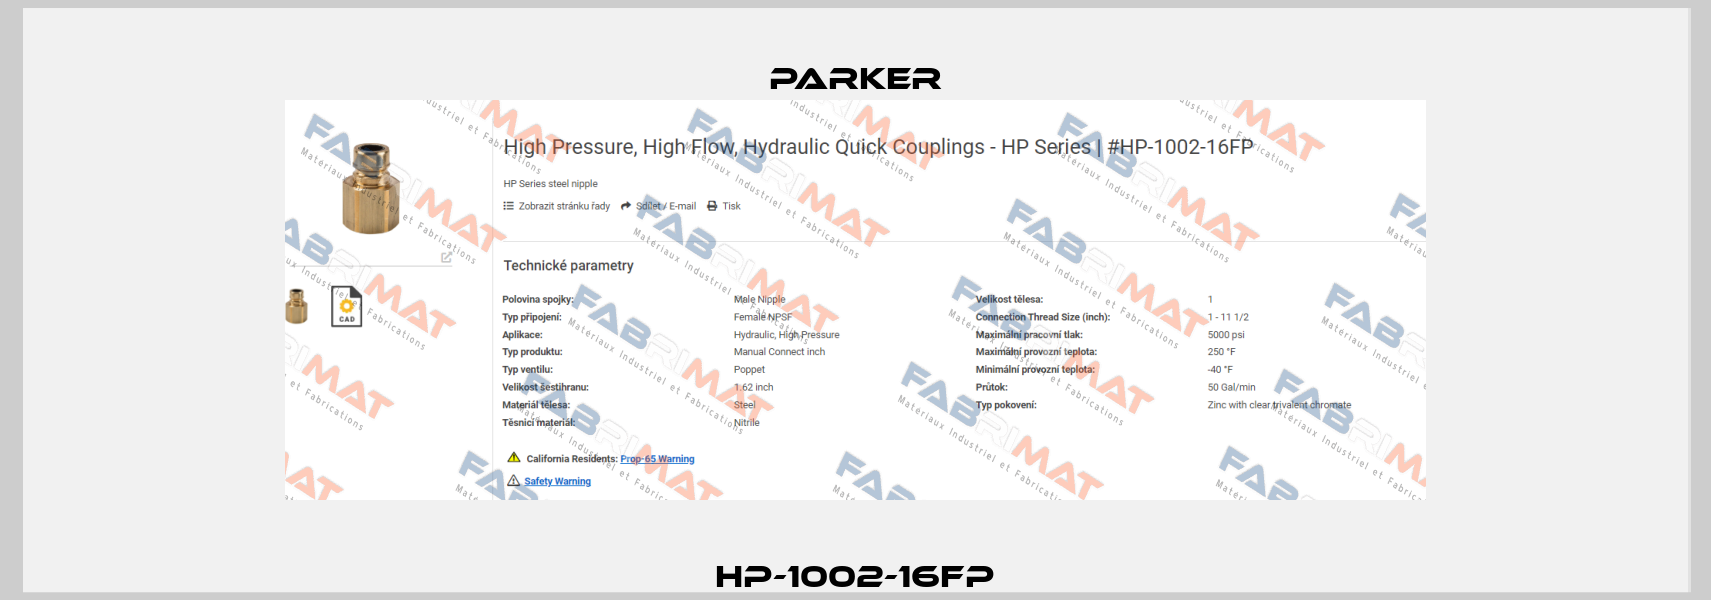 HP-1002-16FP Parker